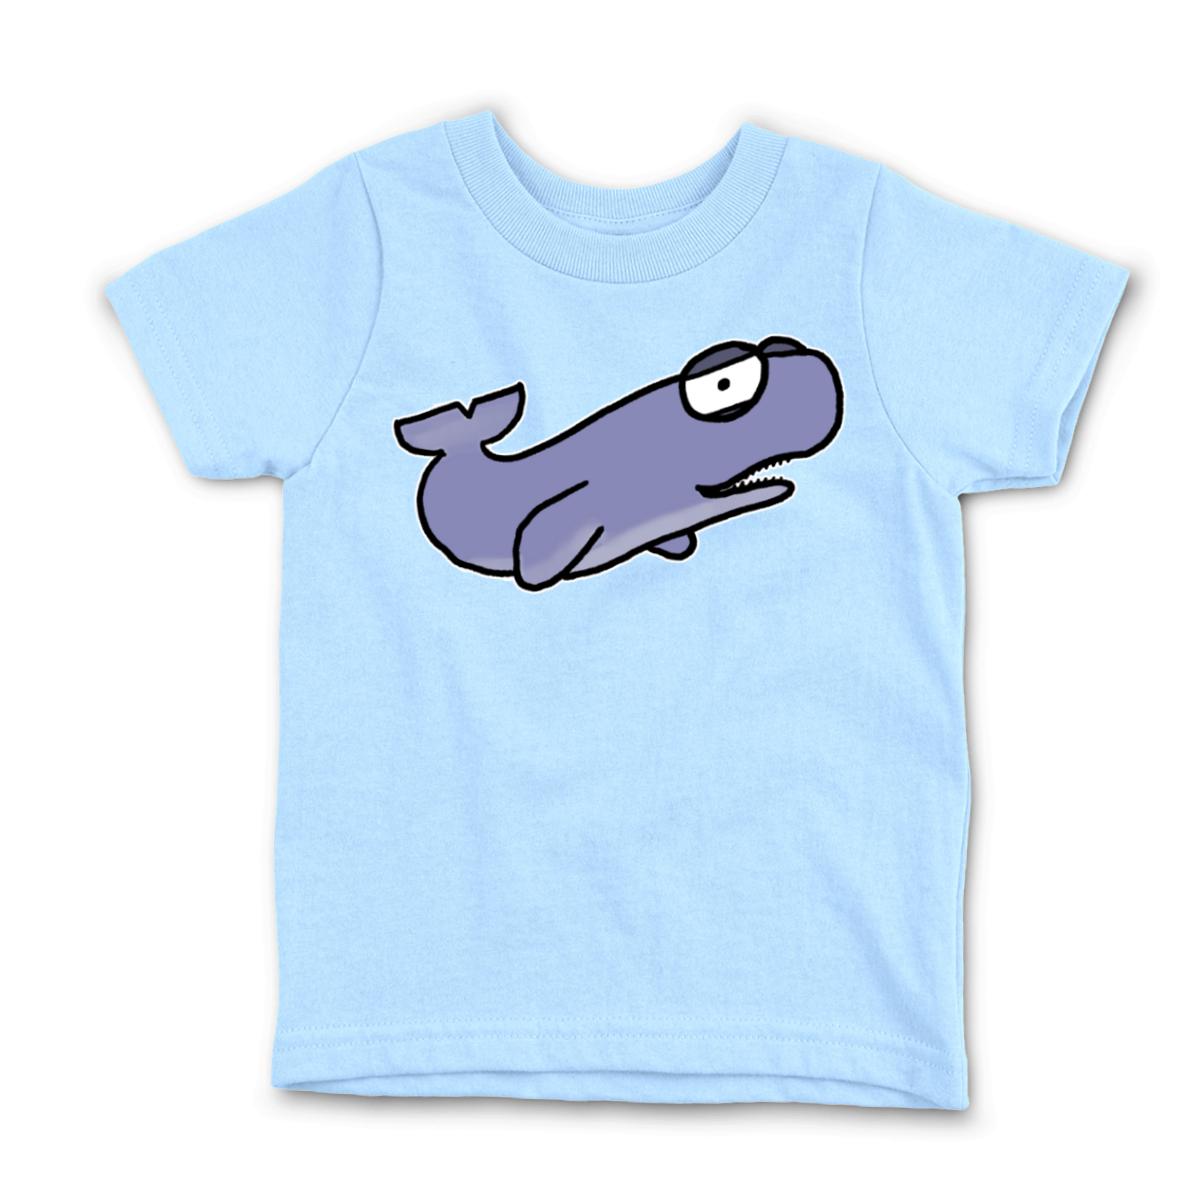 Sperm Whale Kid's Tee Small light-blue